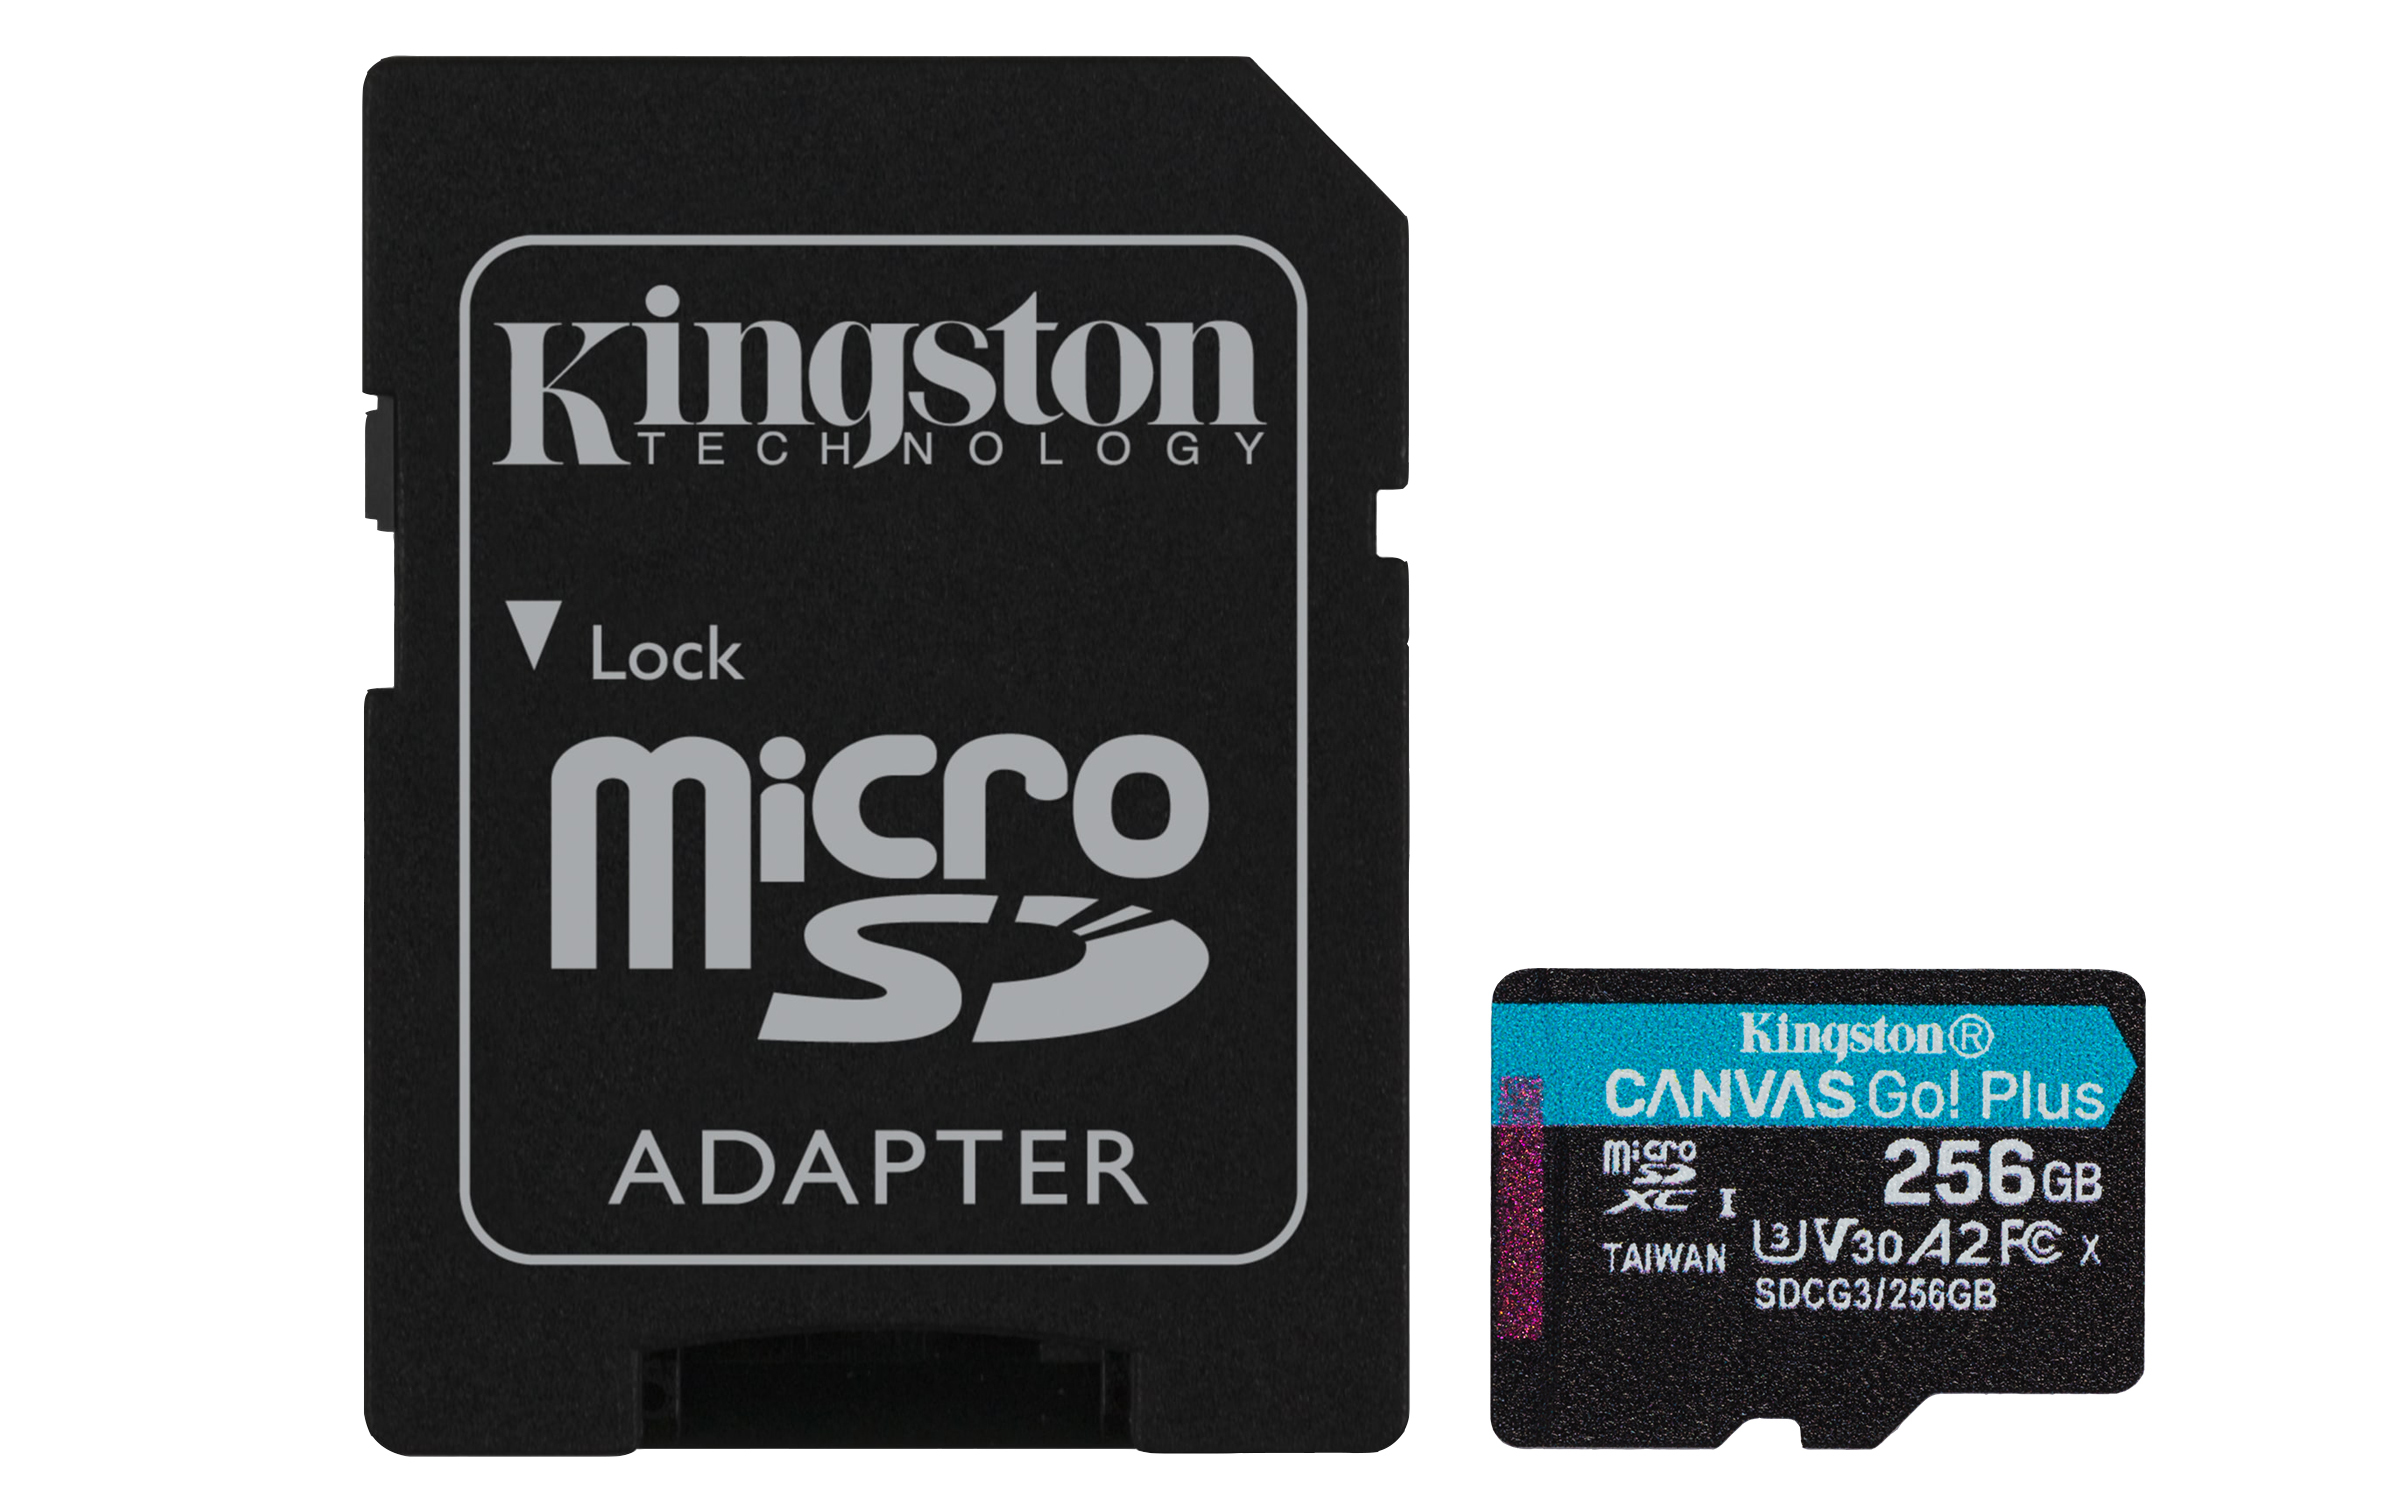 SD MICRO 256GB CL10 UHS-I CON ADATT 170MB/S LET.90MB/S SCRIT.KINGSTON